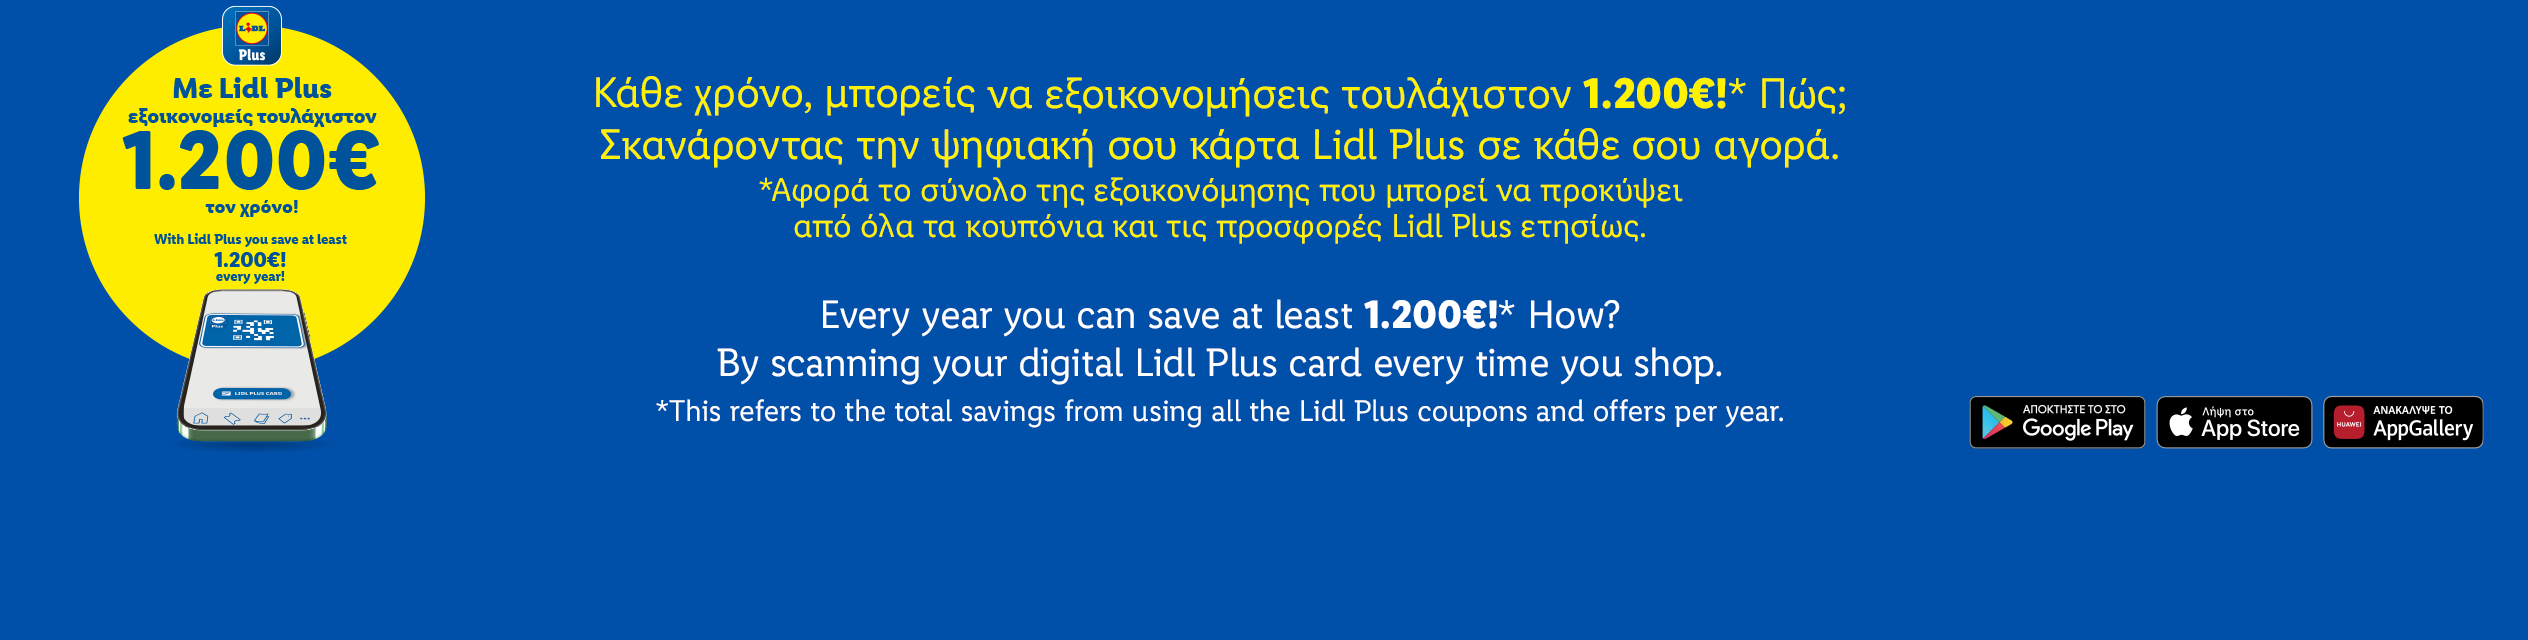 Lidl Plus Yearly Savings